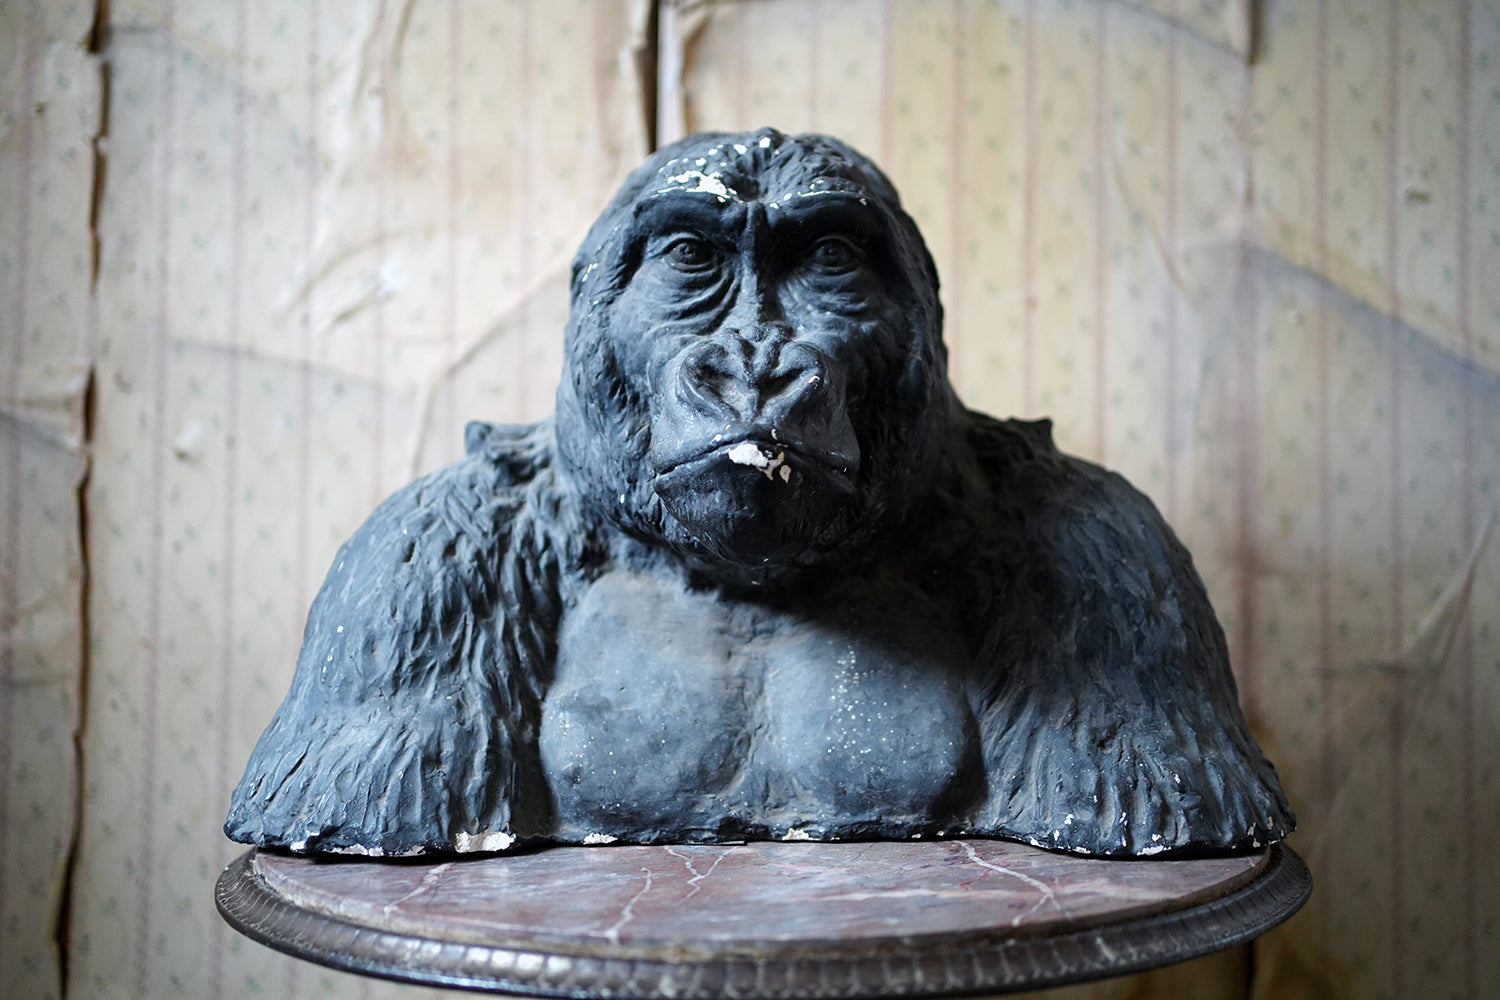 Gorilla Weight Mold Only – Gorilla Weight Molds